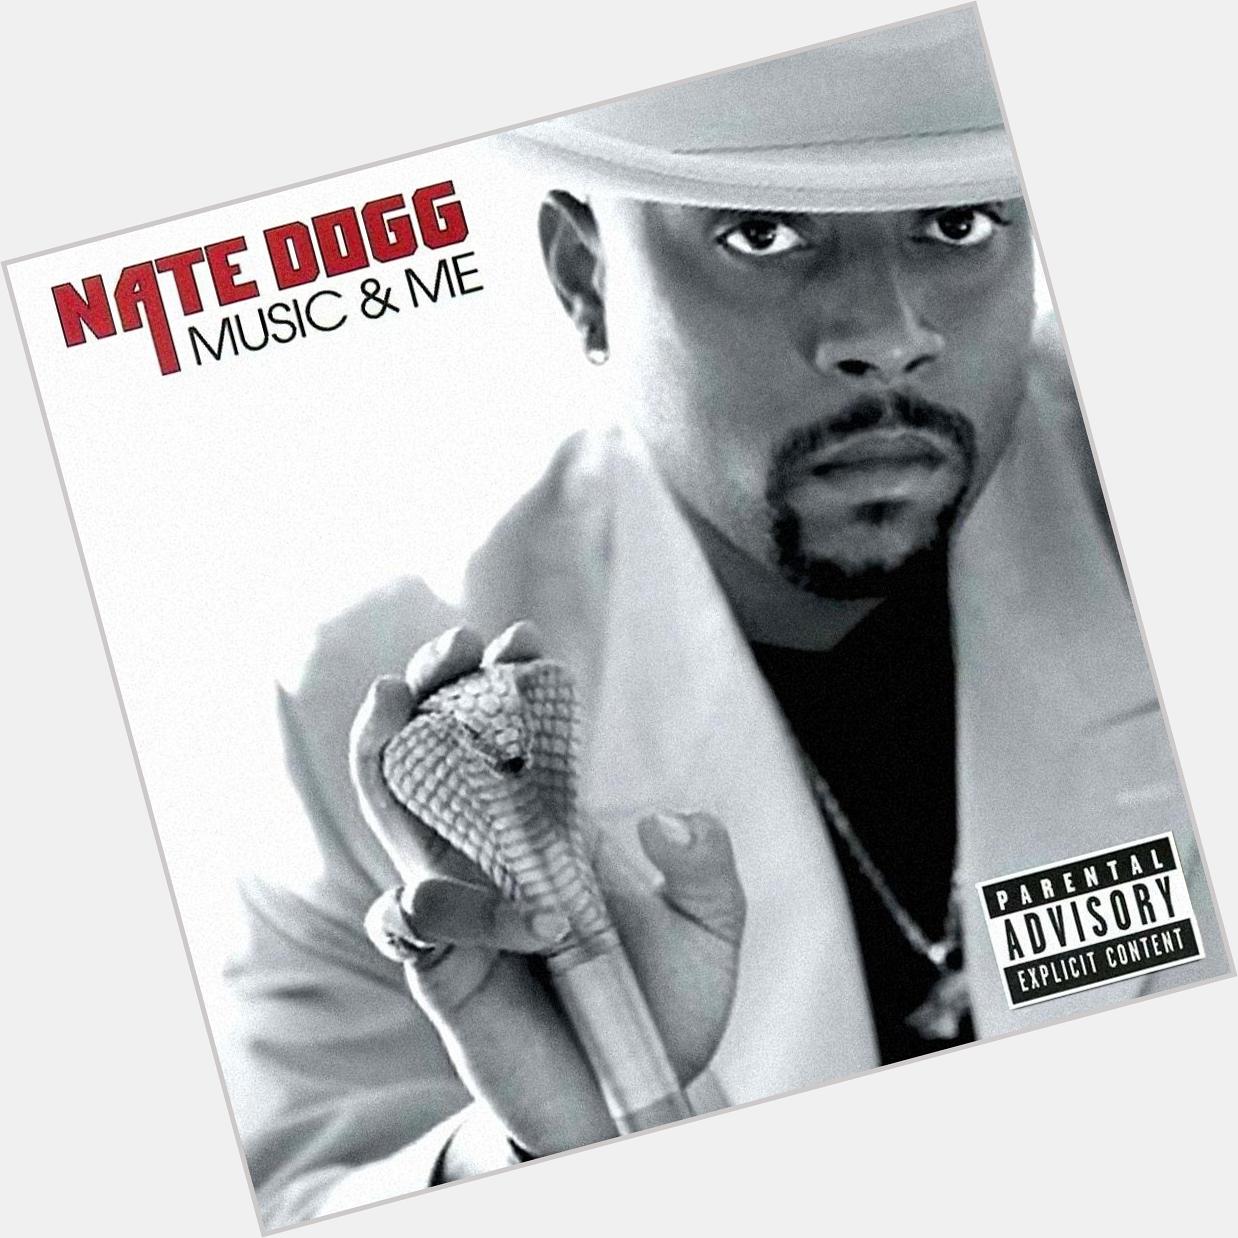 HAPPY*BIRTHDAY    NATE DOGG!! //g-funk/hiphop/soul/r&b/ singer/rapper/actor //pressPlay>>@  